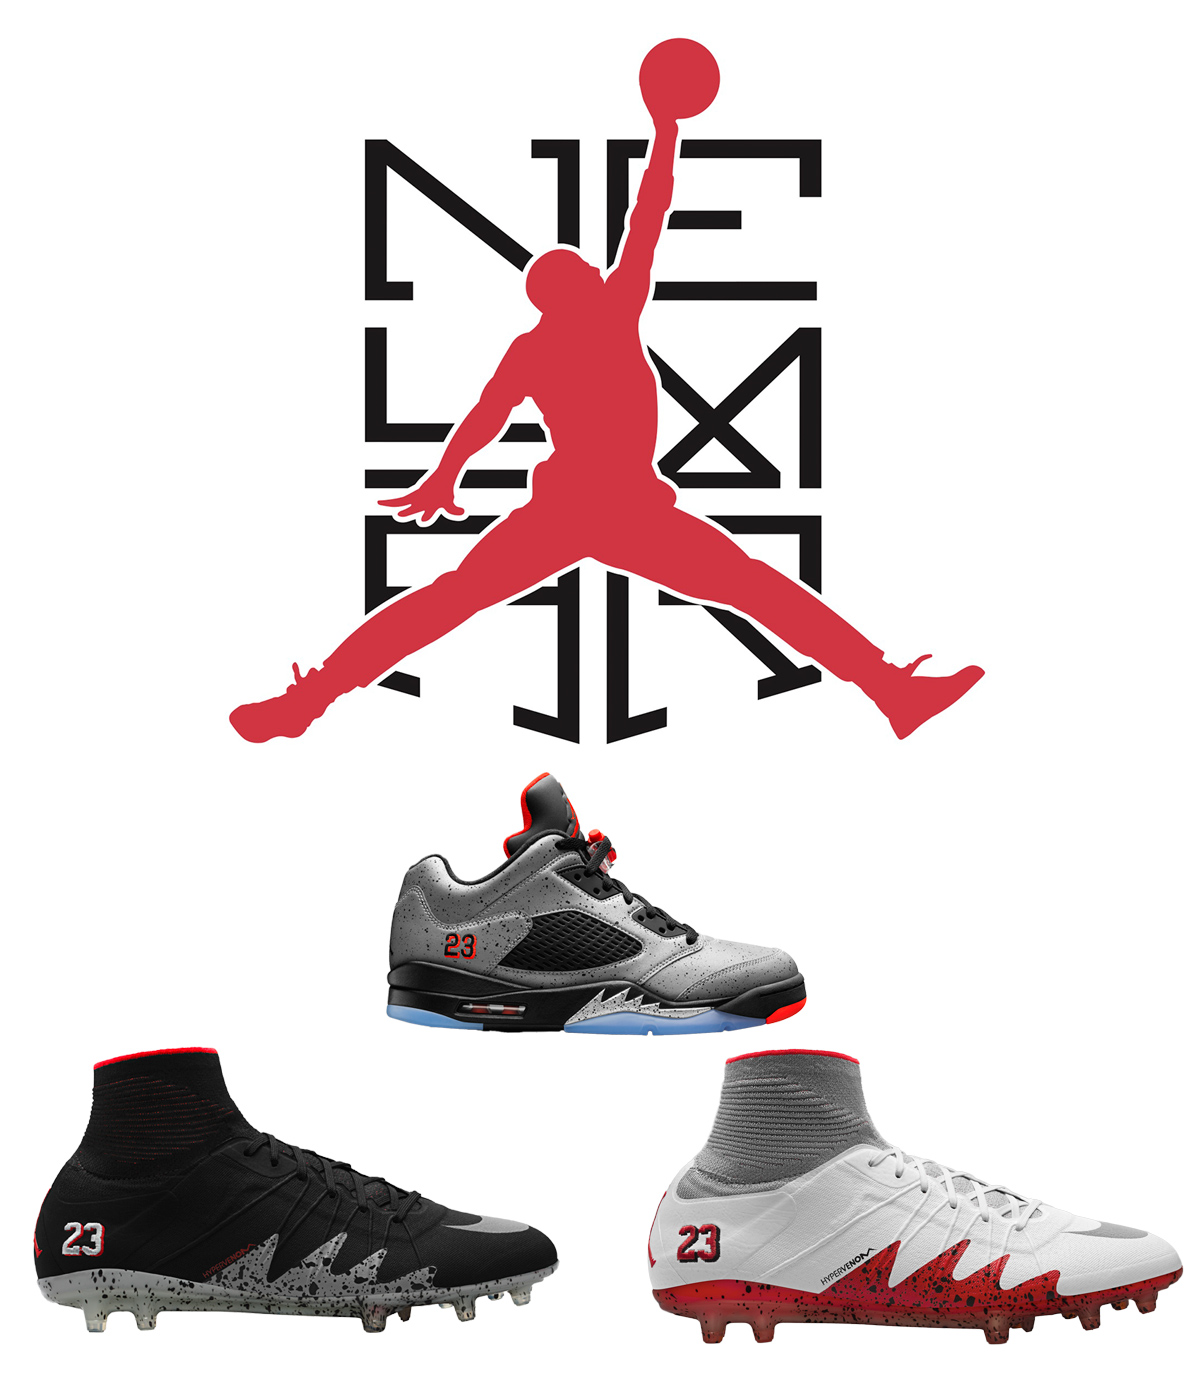 Nike X Jordan Collectionâ€¦ El de la colecciÃ³n Neymar-Jordan | abcdefutbol